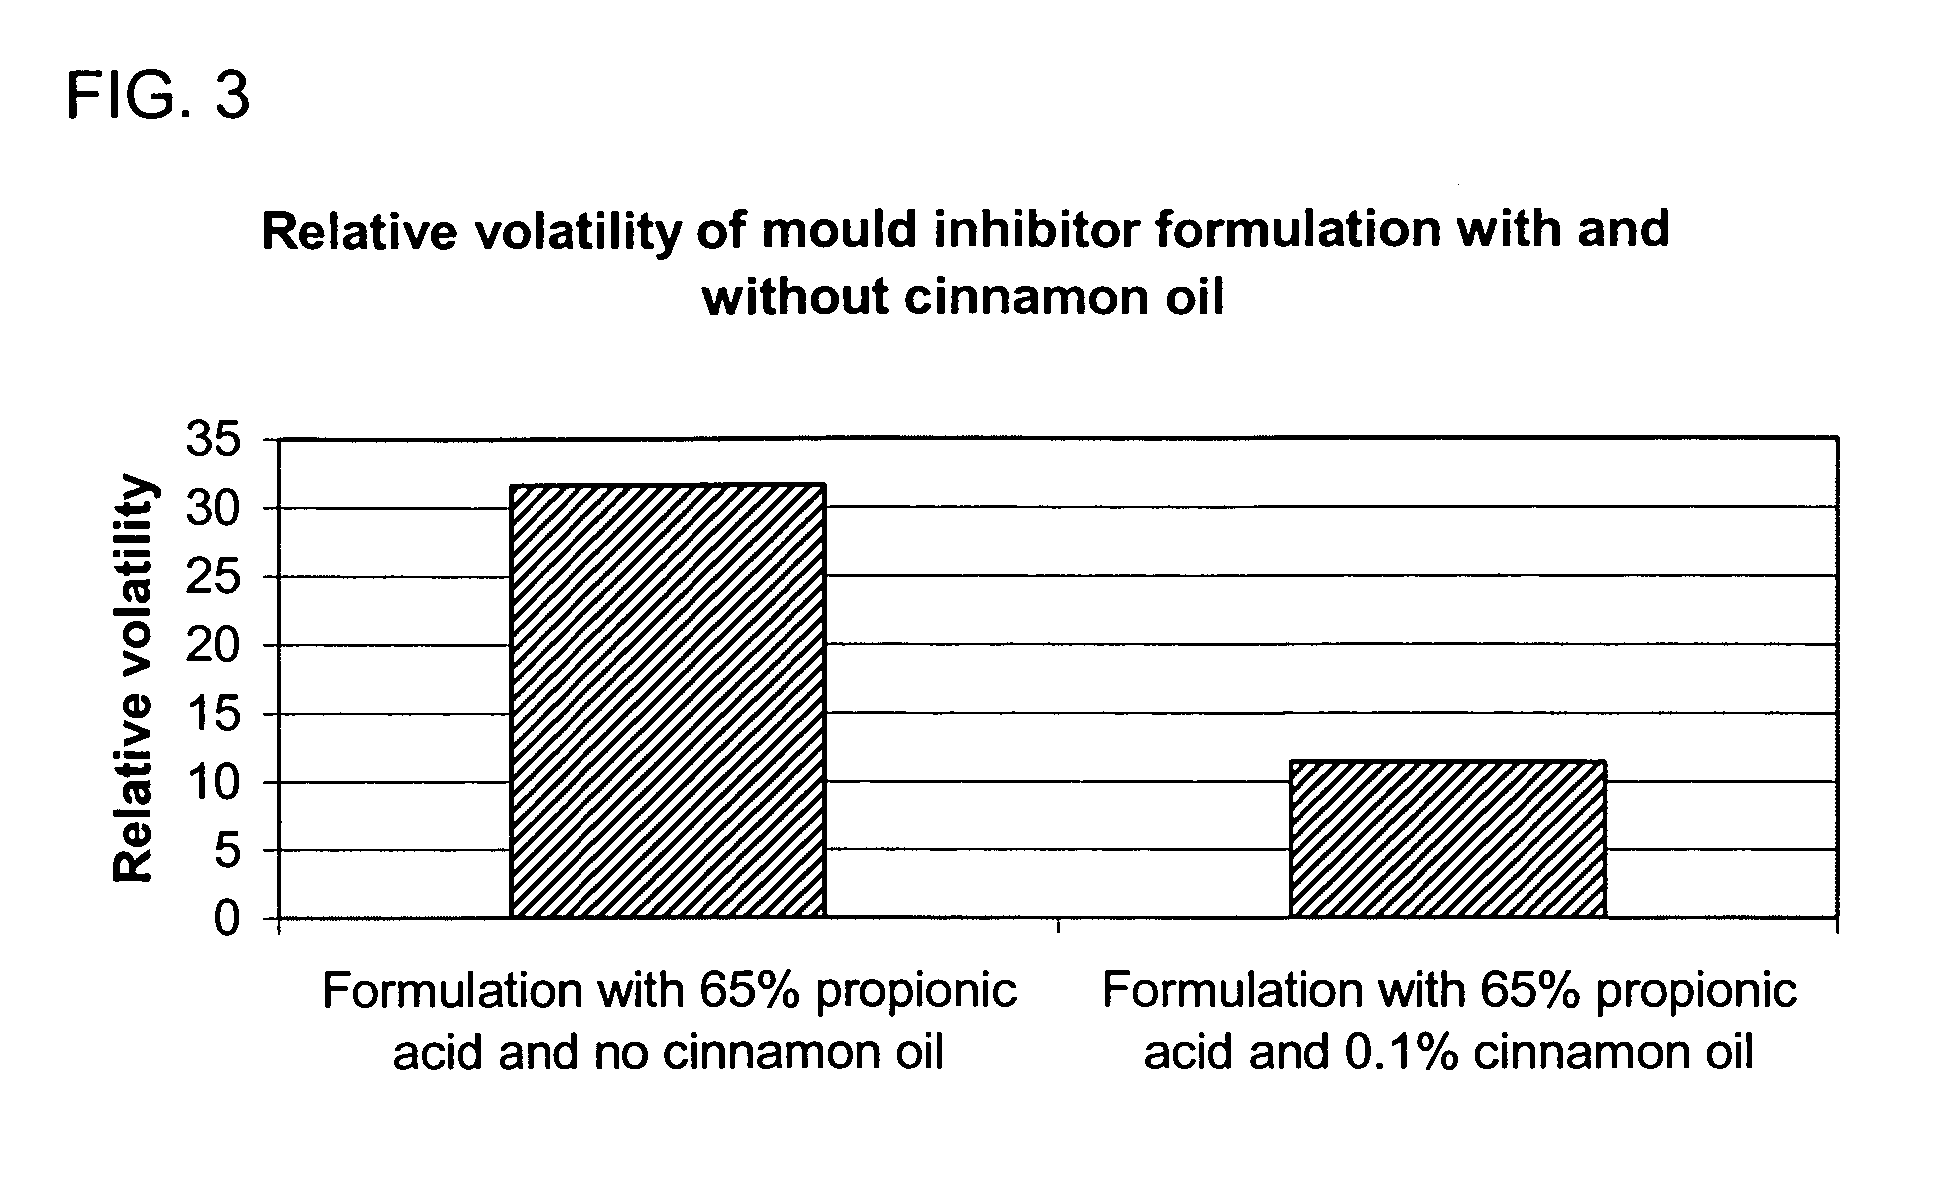 Mold inhibitor having reduced corrosiveness